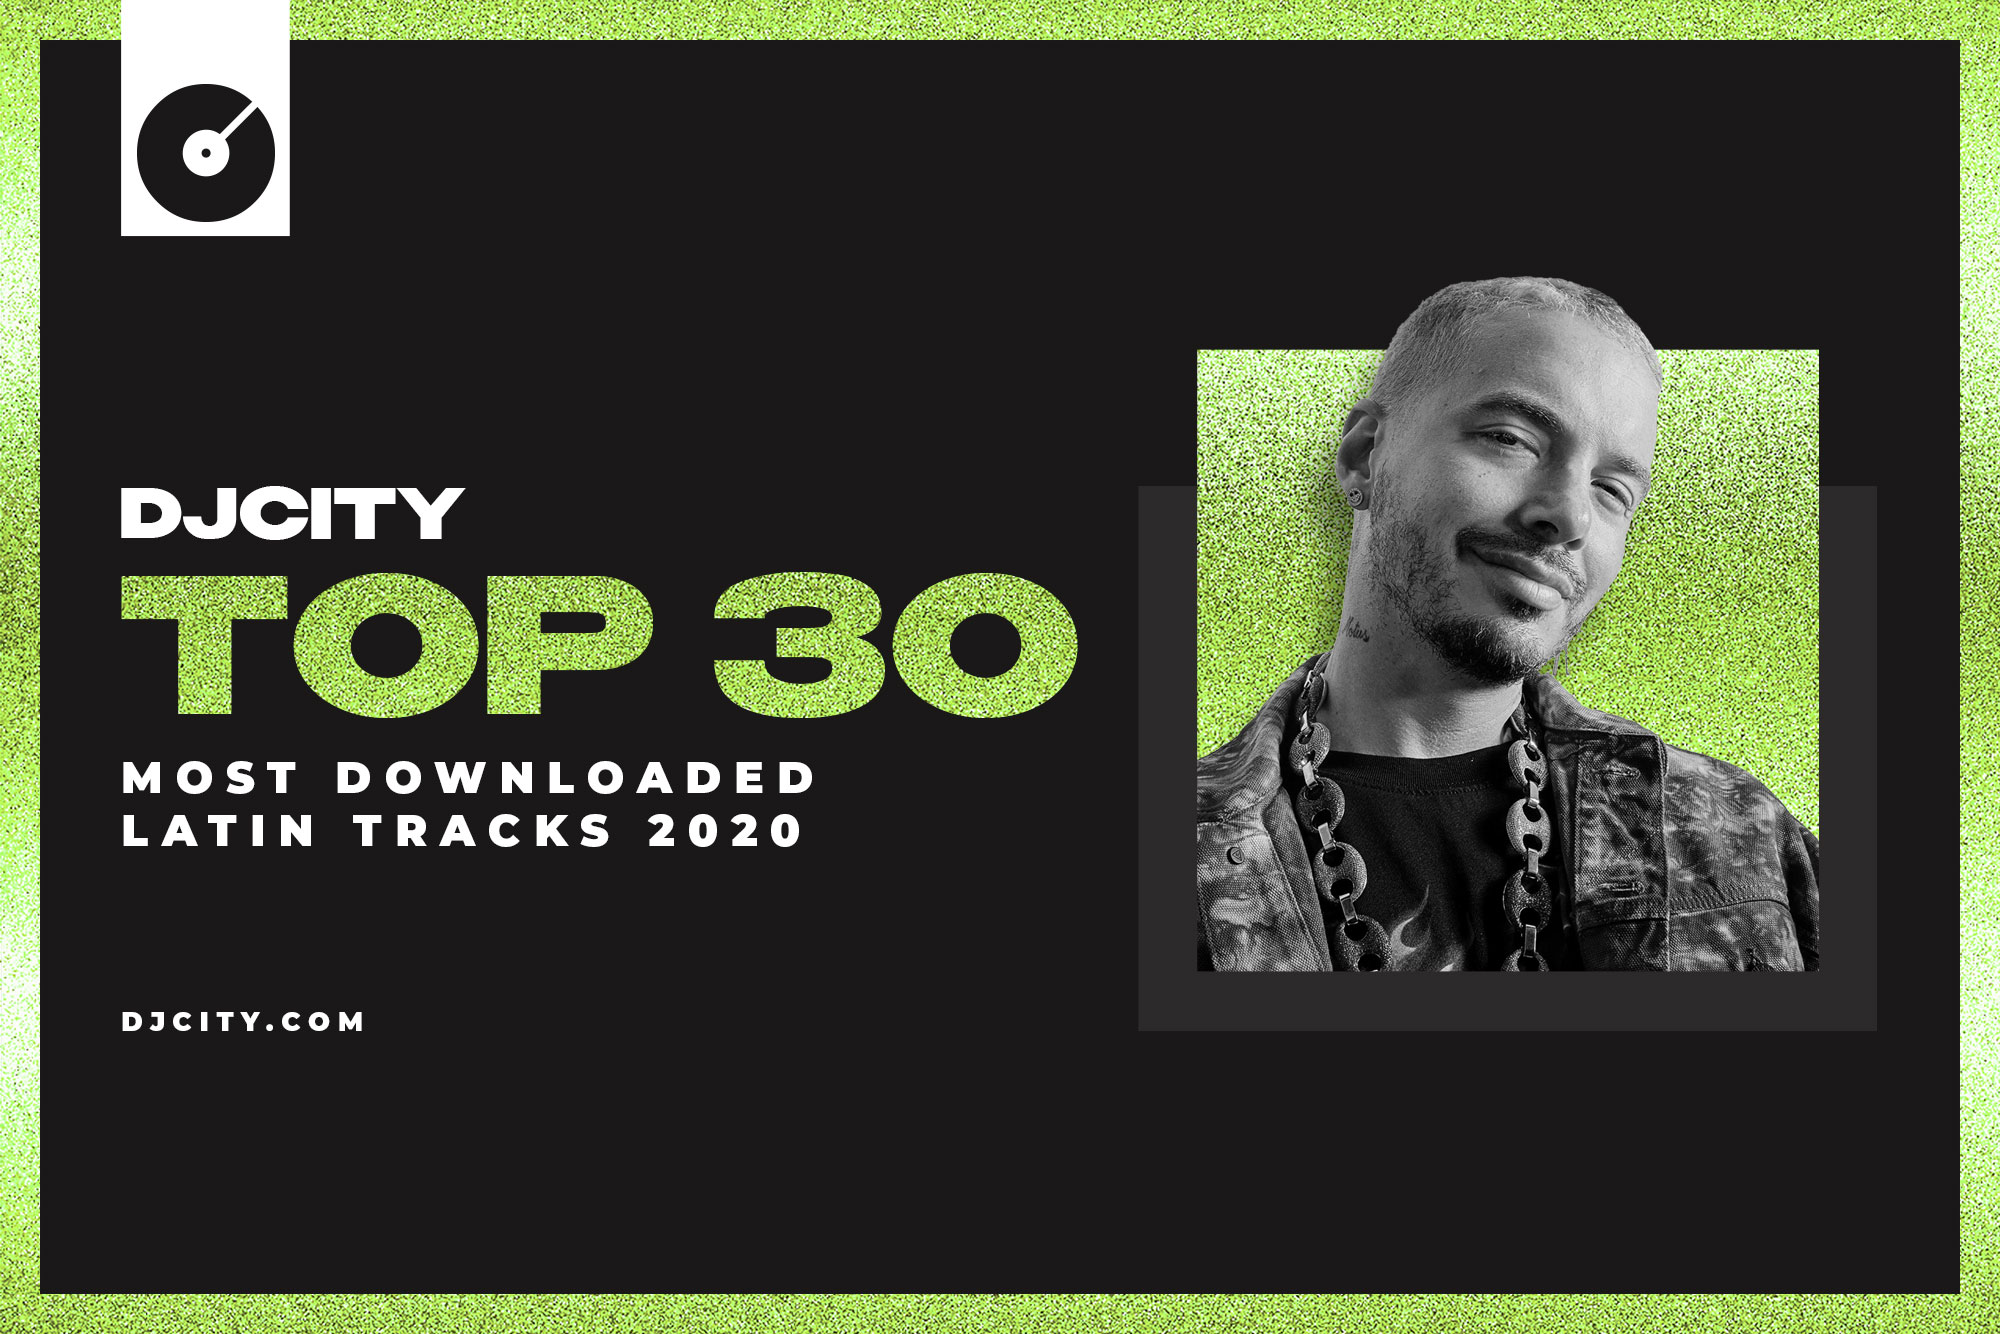 DJcity’s 30 Most Downloaded Latin Tracks of 2020